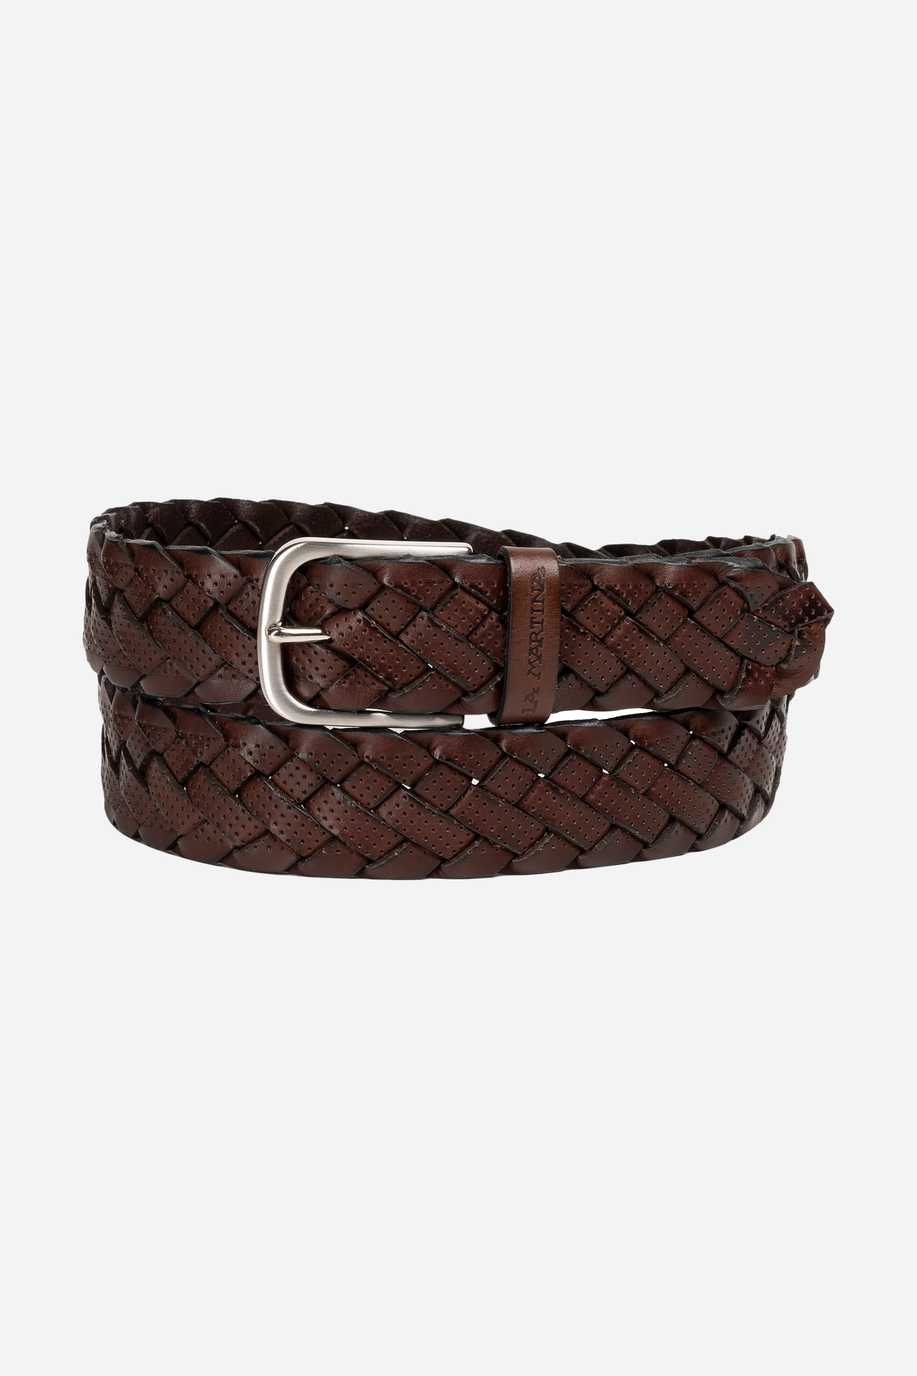 Men's belt in woven leather - Belts | La Martina - Official Online Shop